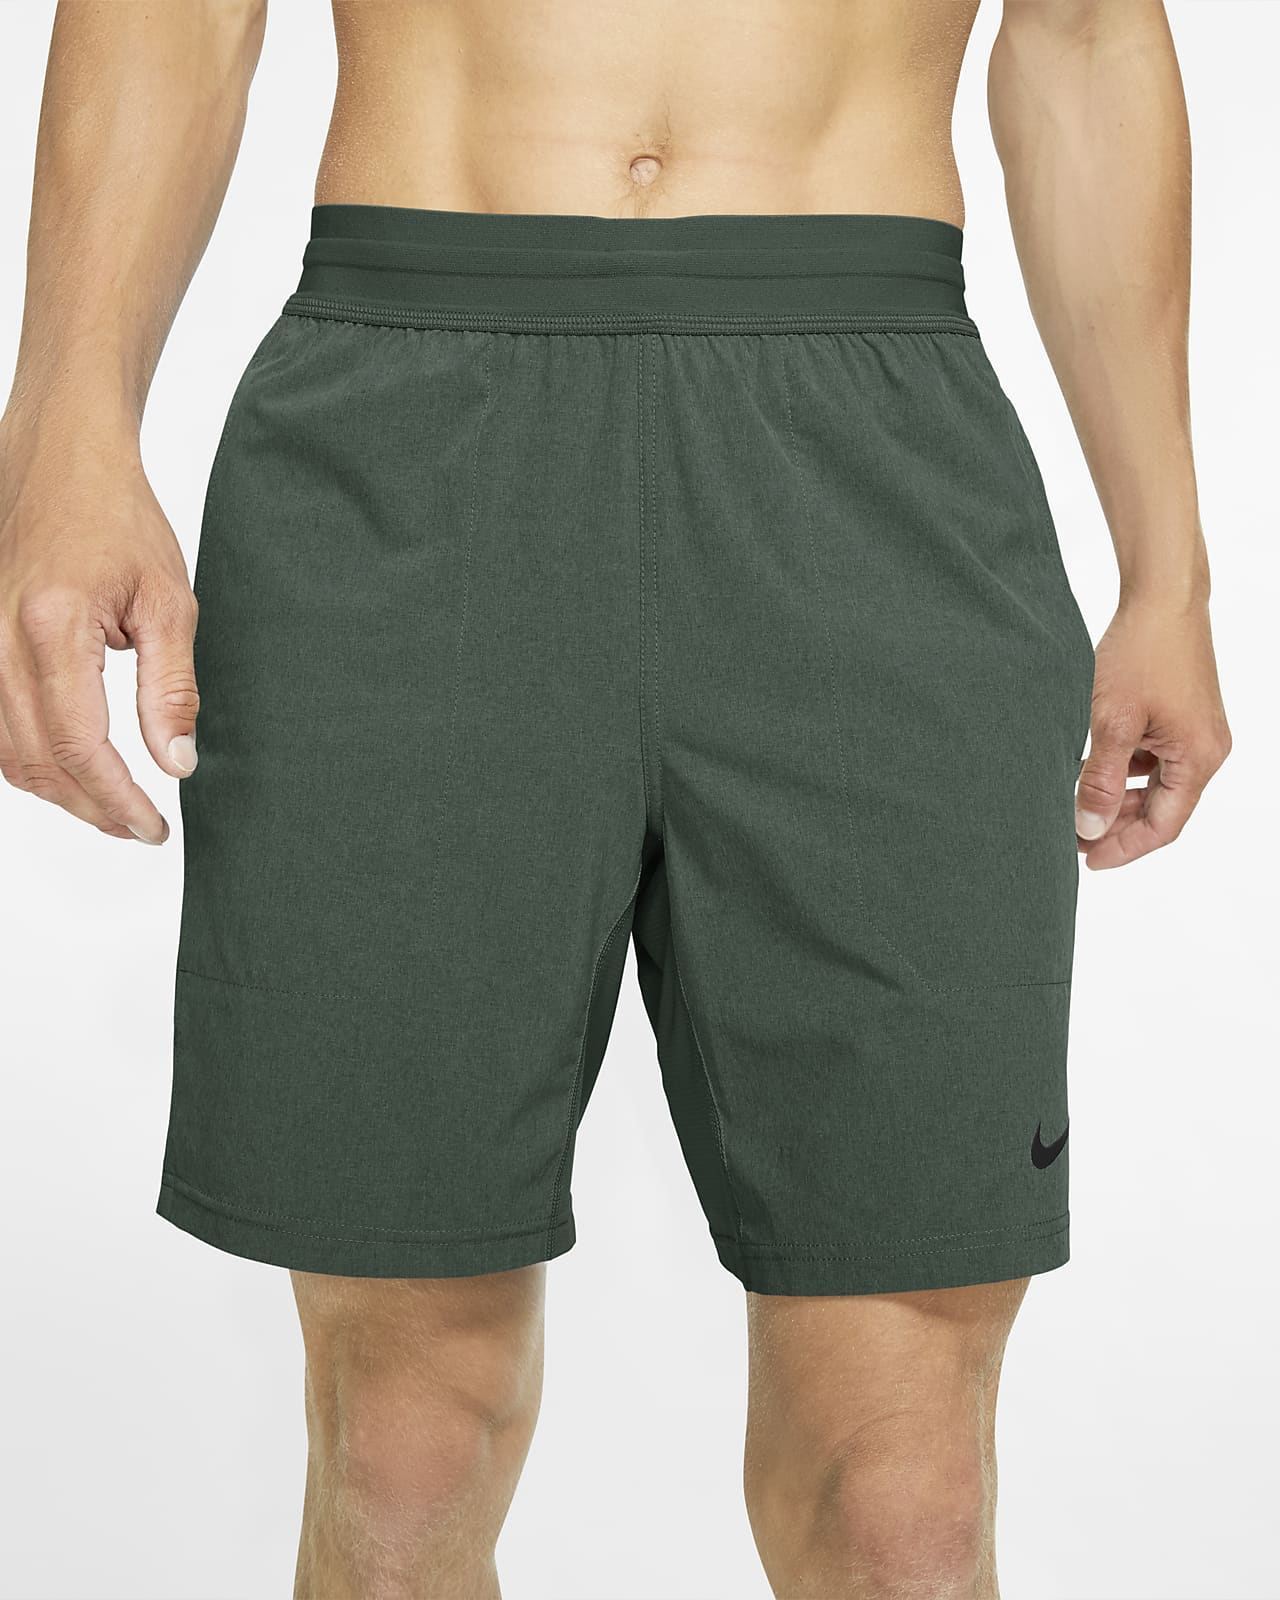 men's training shorts nike flex